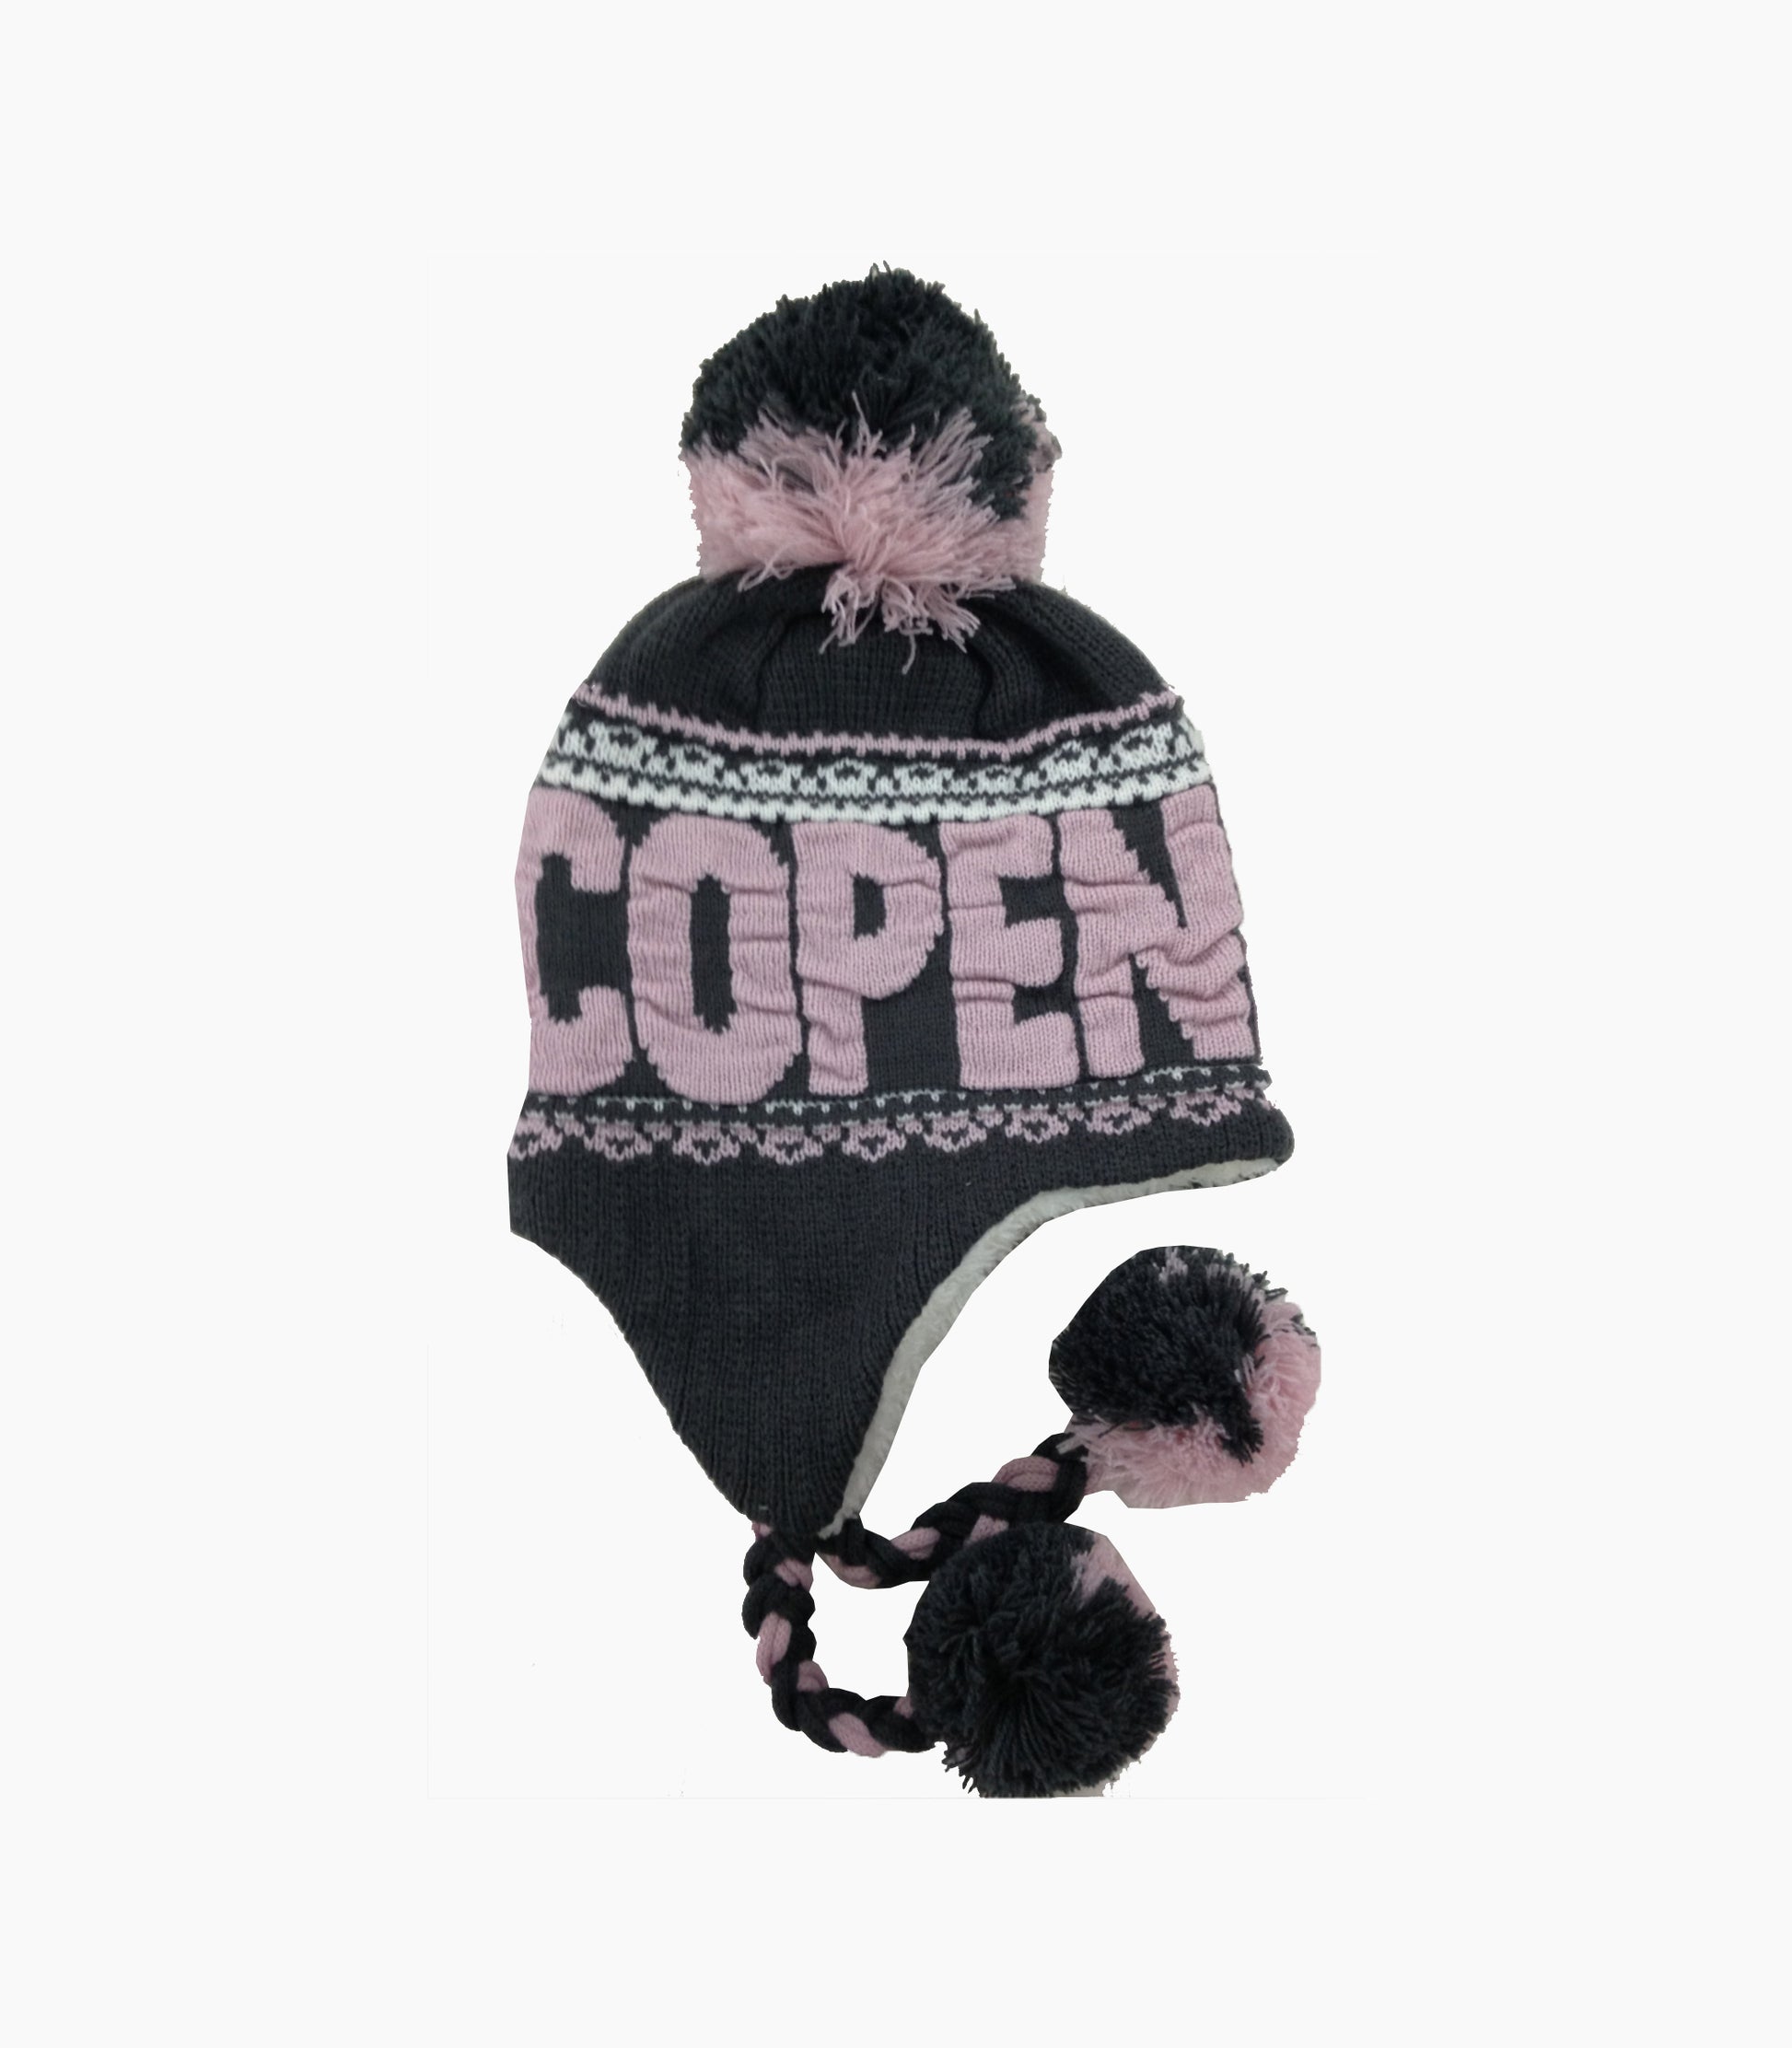 Copenhagen Winter hat - Robin Ruth